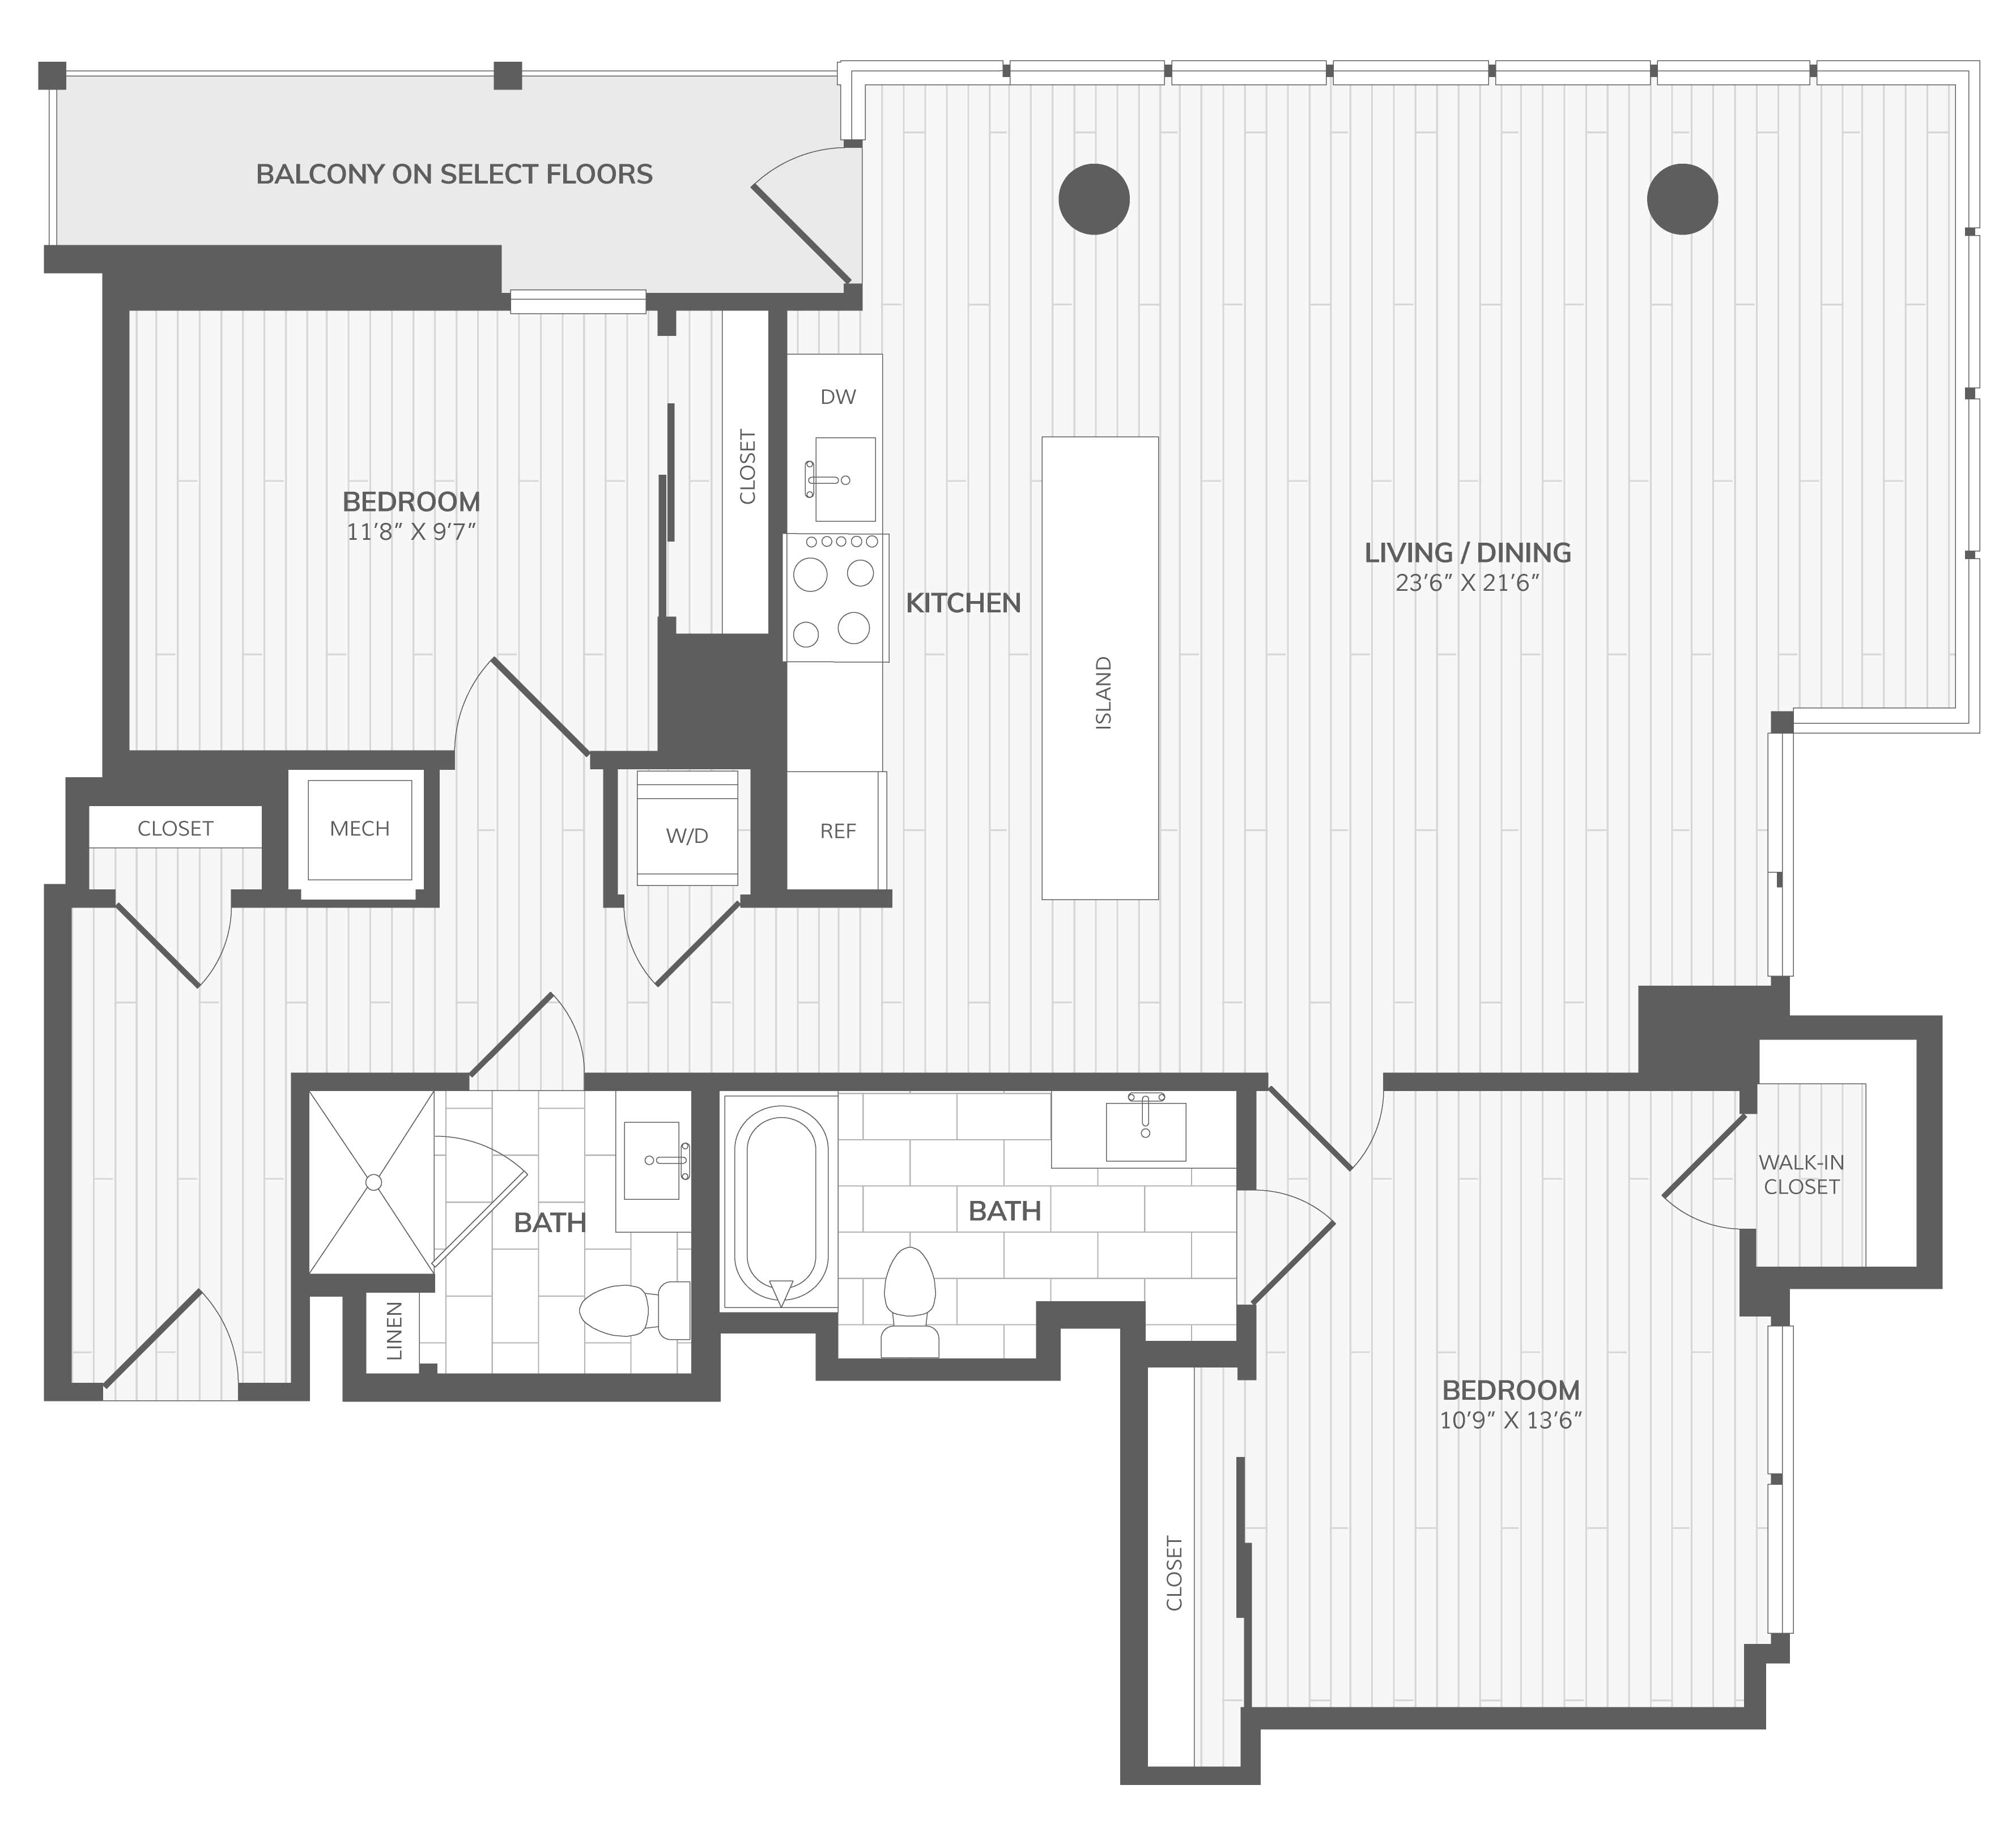 Floorplan Image of E-501